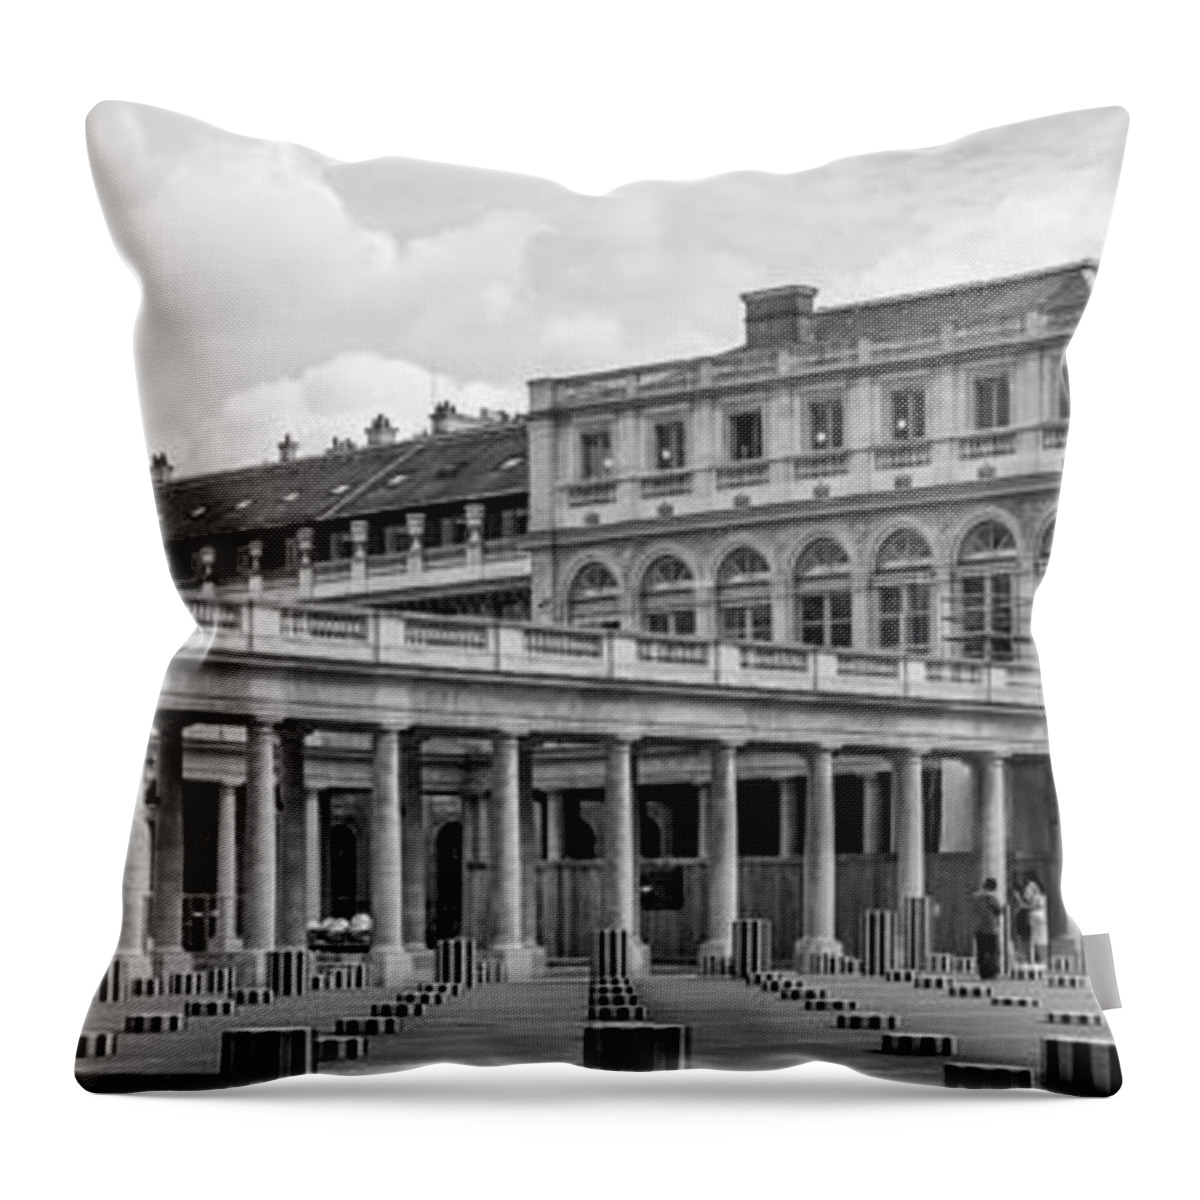 Paris Throw Pillow featuring the photograph Posing for Photo Shoot at Le Palais Royal by Gary Karlsen